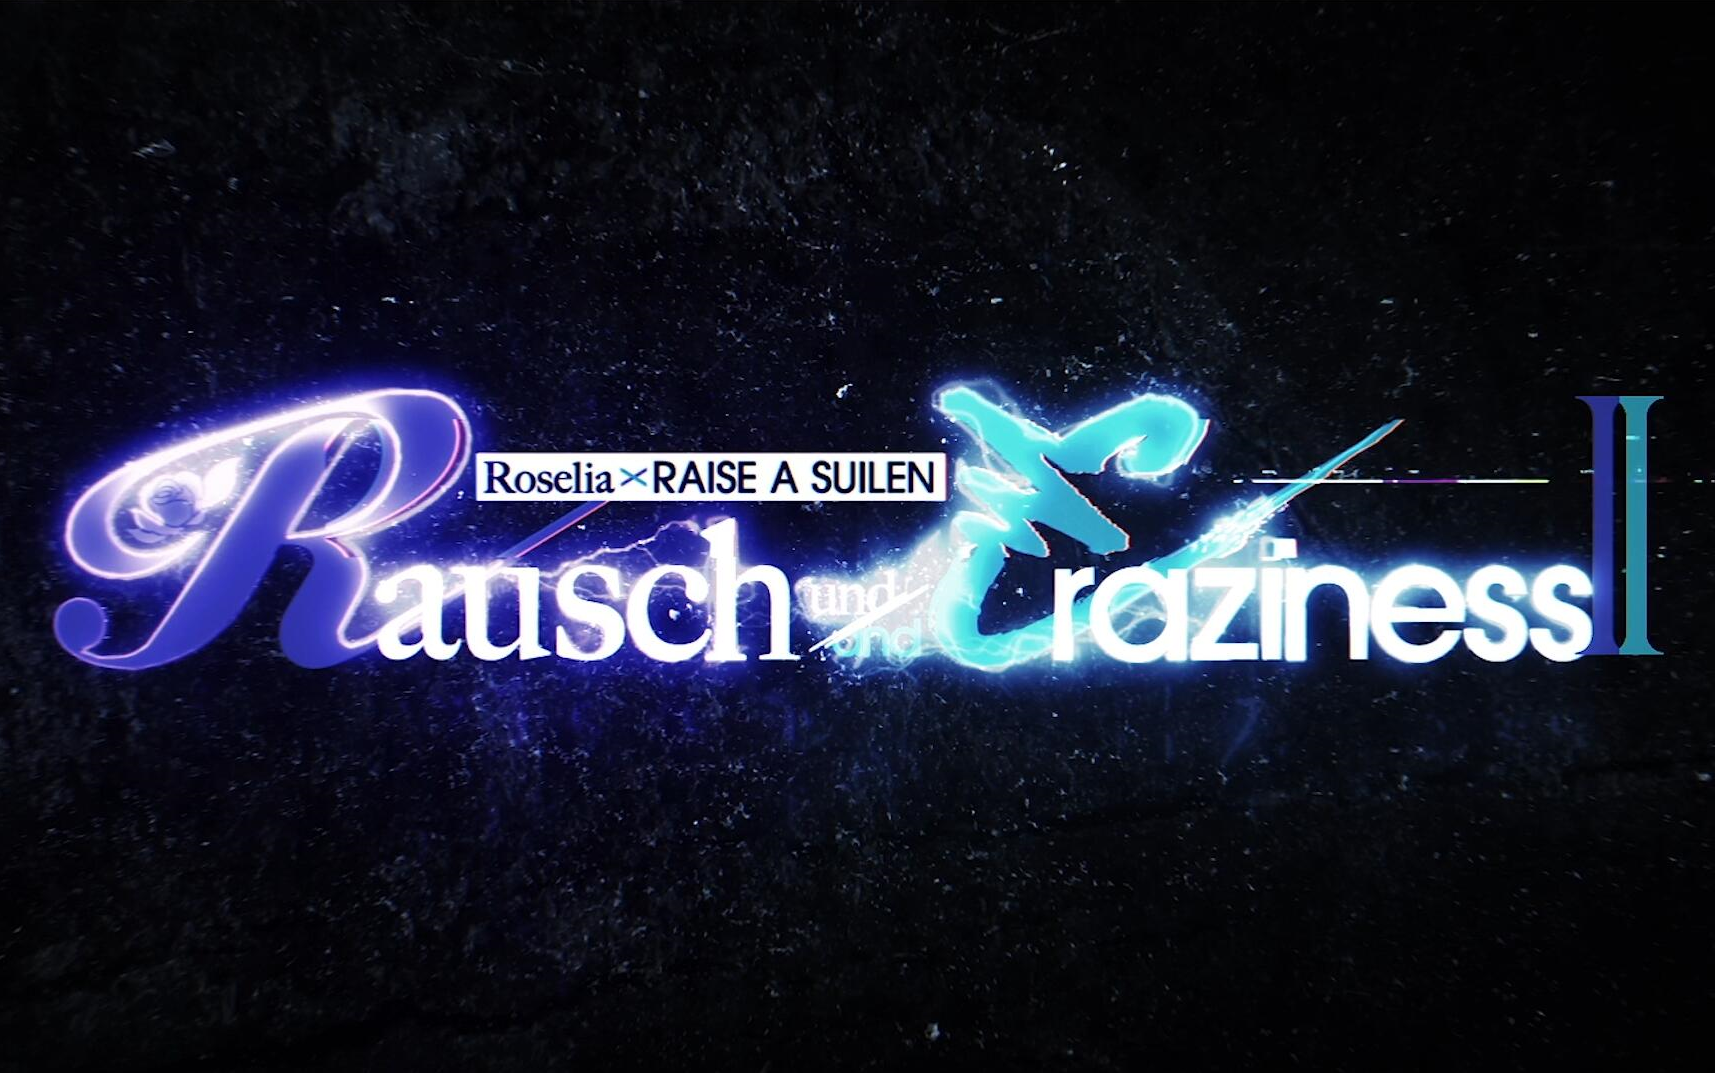 [4K整场][60FPS]对邦Ⅱ_Roselia×RAISE A SUILEN共同LIVE「Rausch und／and Craziness Ⅱ」